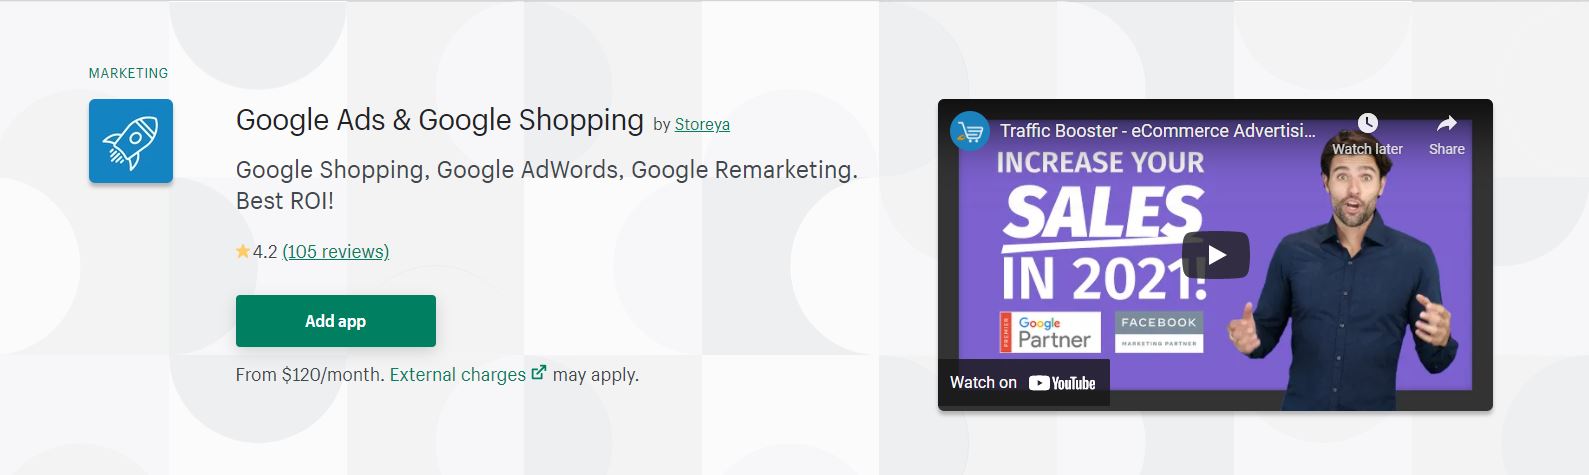 Google Ads & Google Shopping